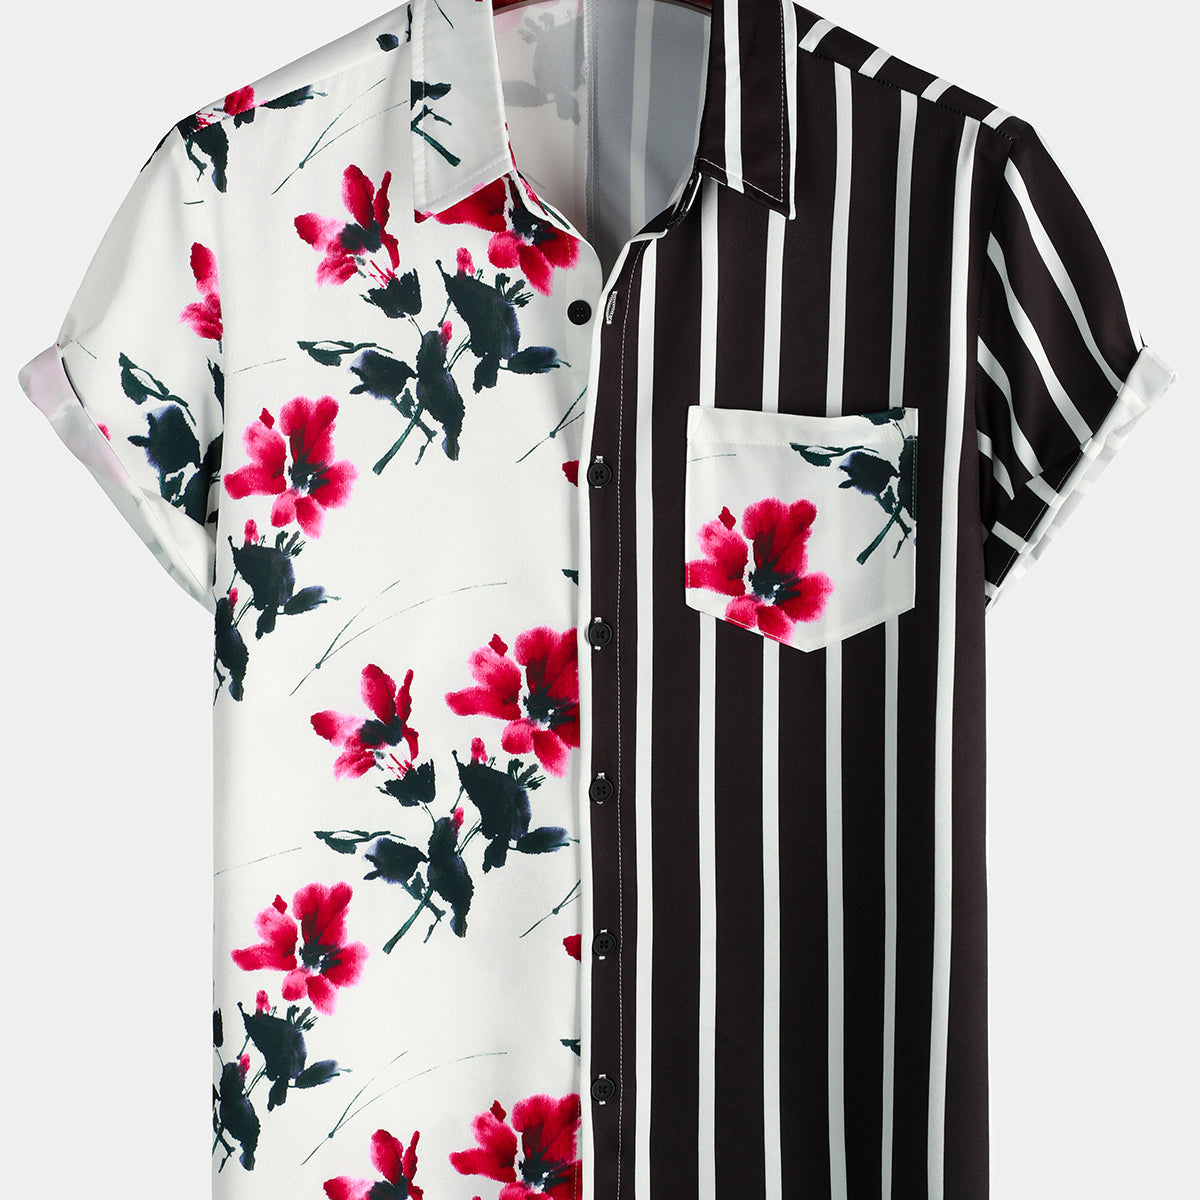 Men's Striped & Red Floral Print Summer Short Sleeve Shirt